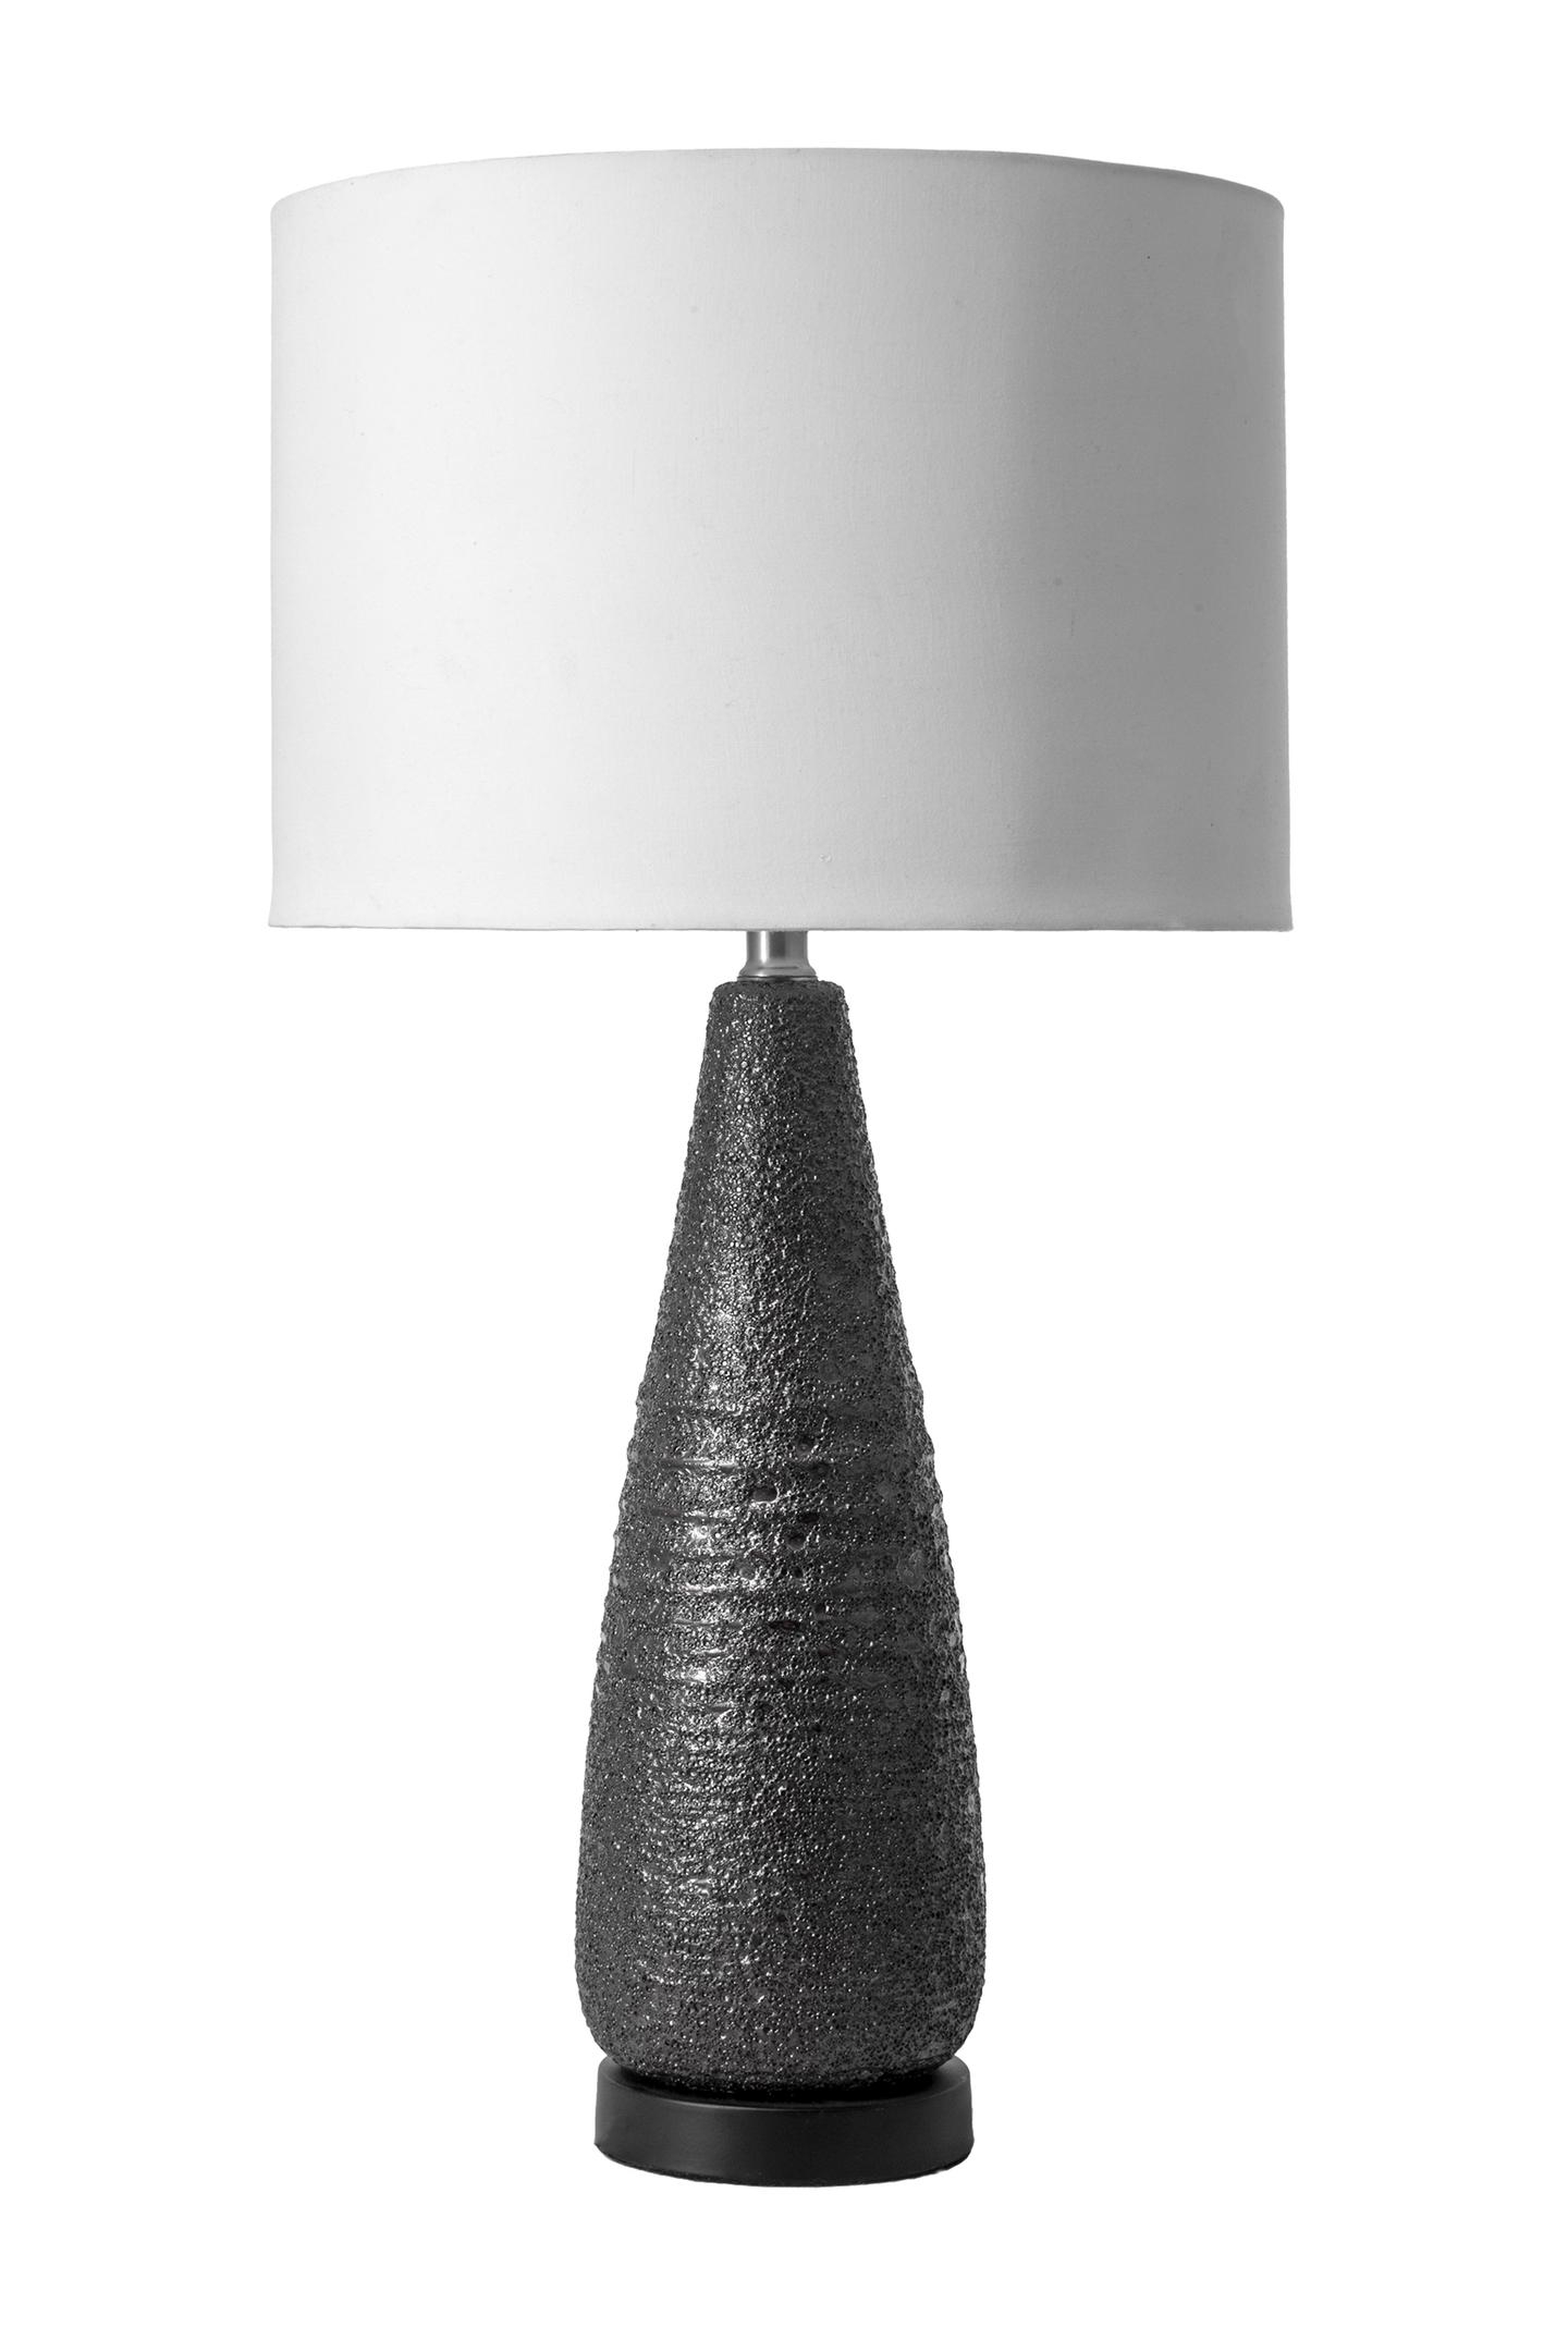 Upland 29" Ceramic Table Lamp - Loom 23